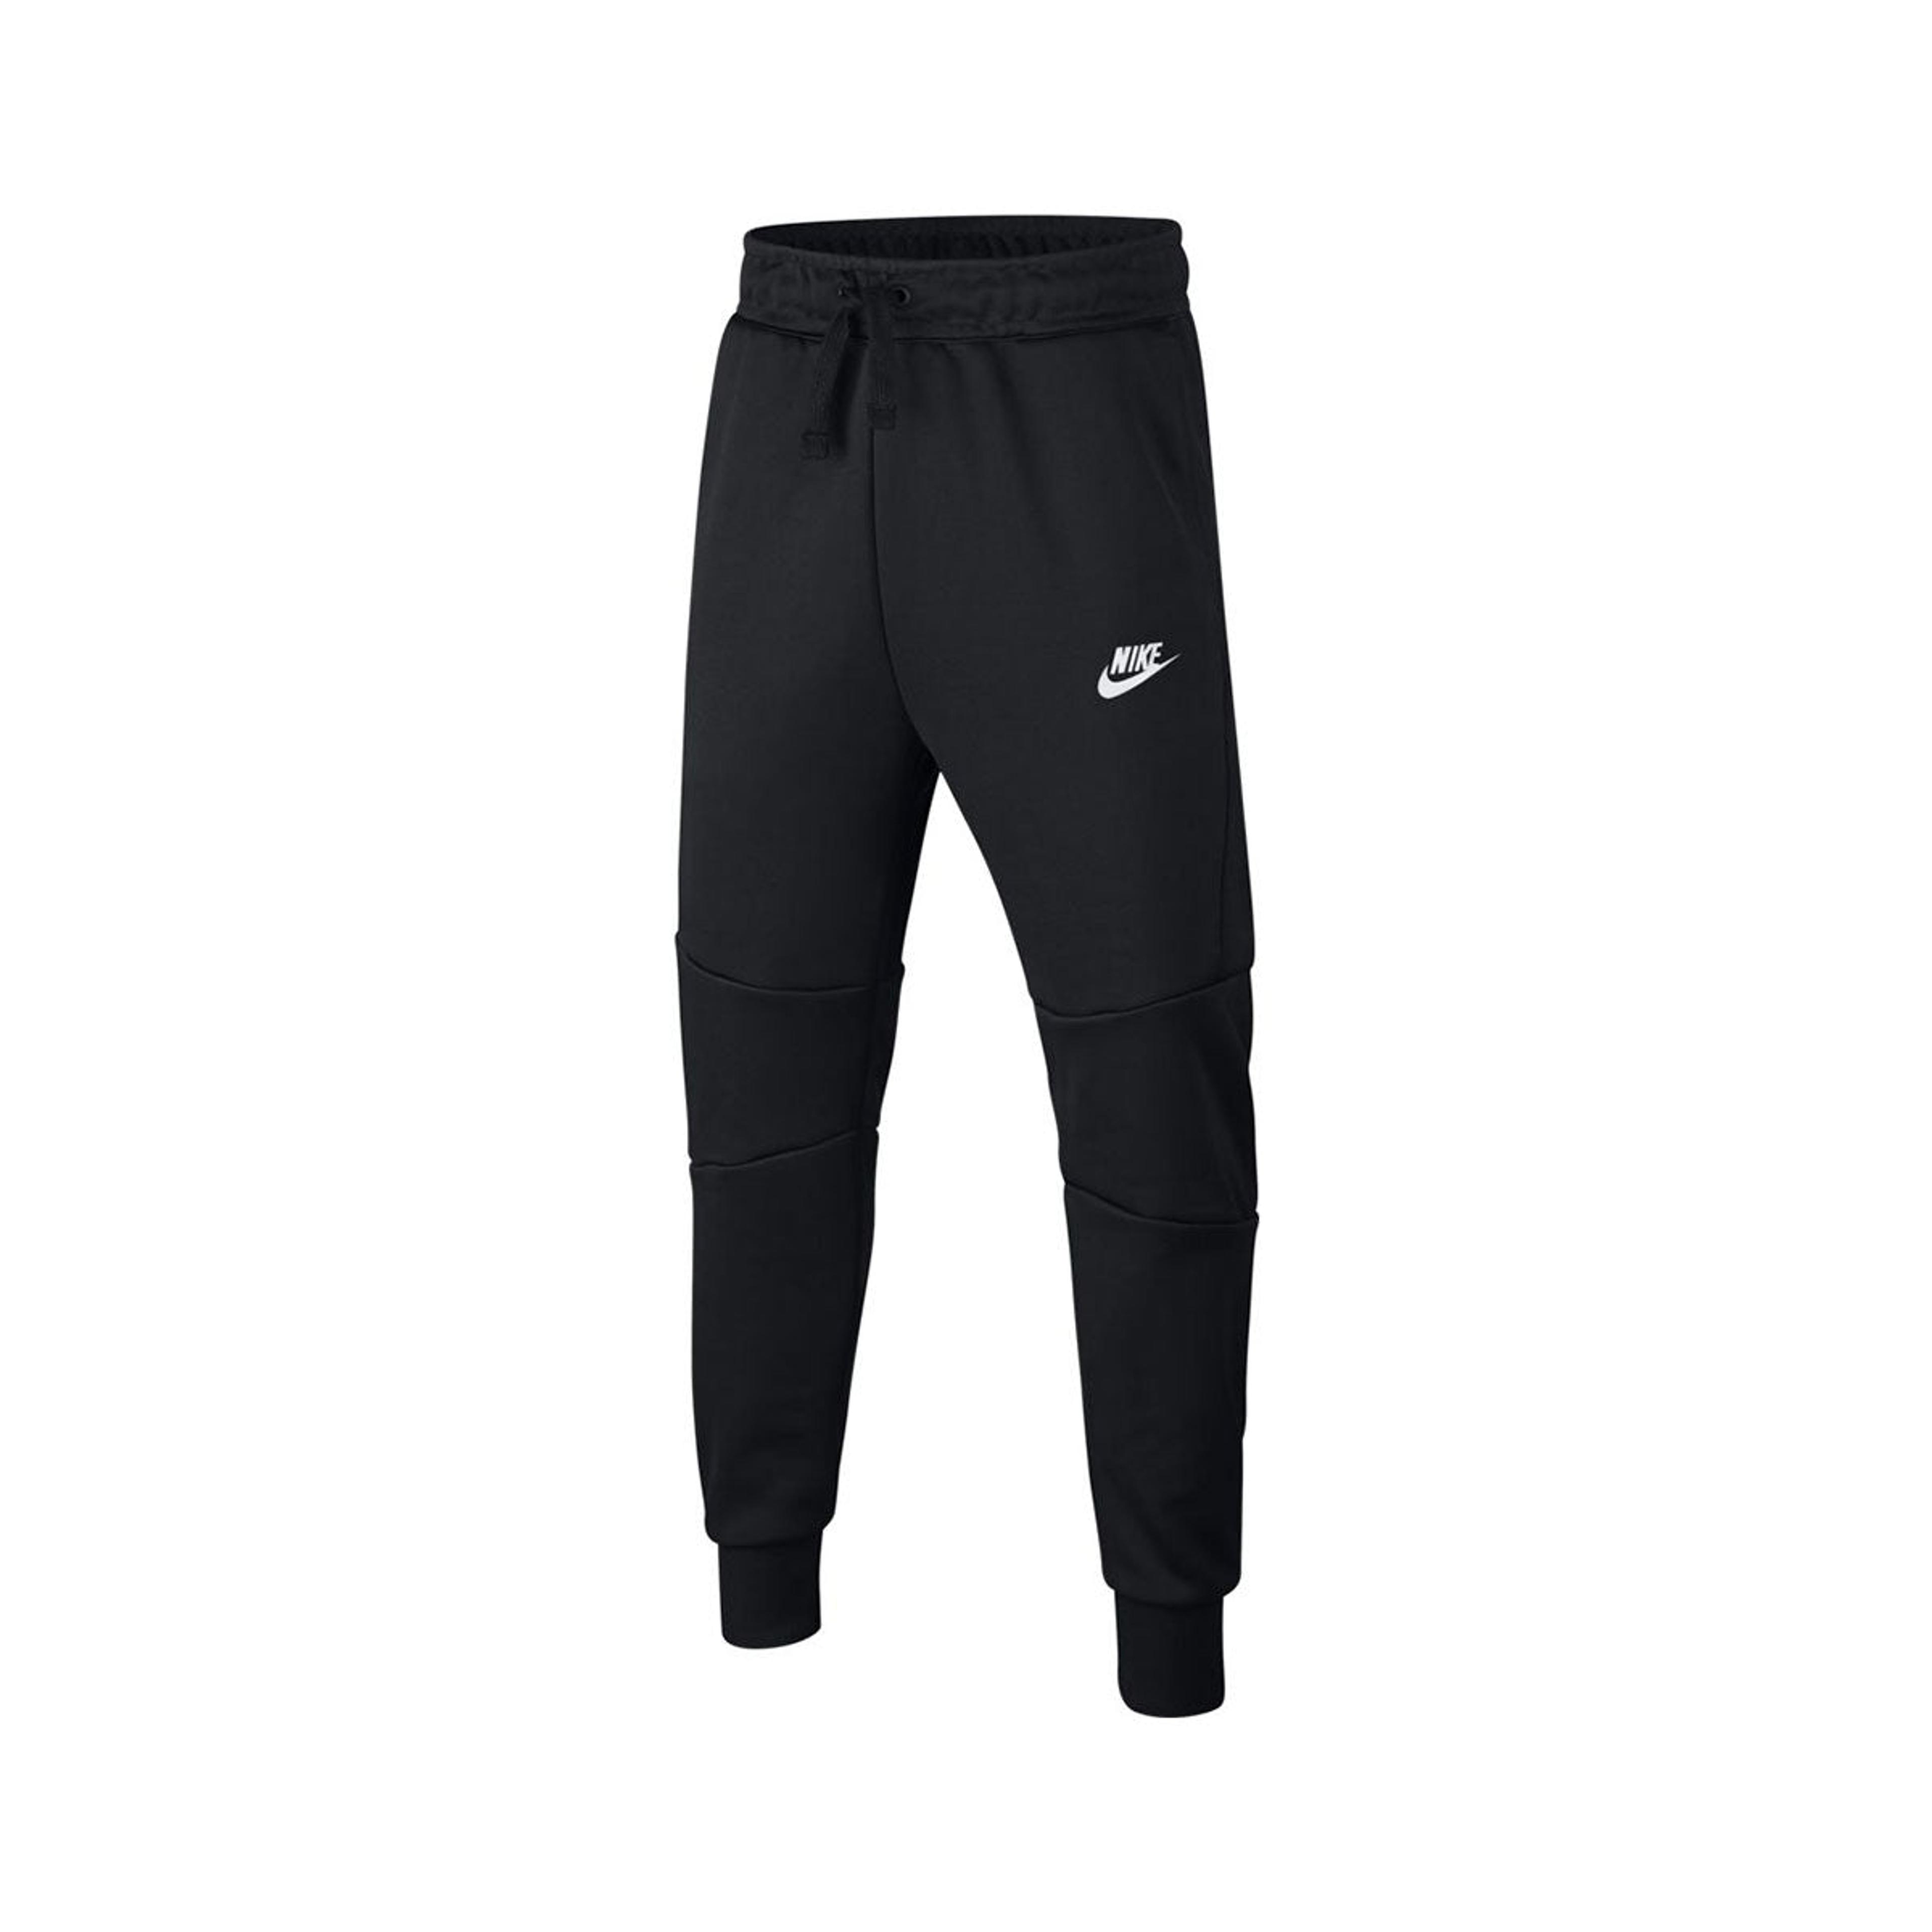 Nike Boy's Tech Fleece Pants Joggers